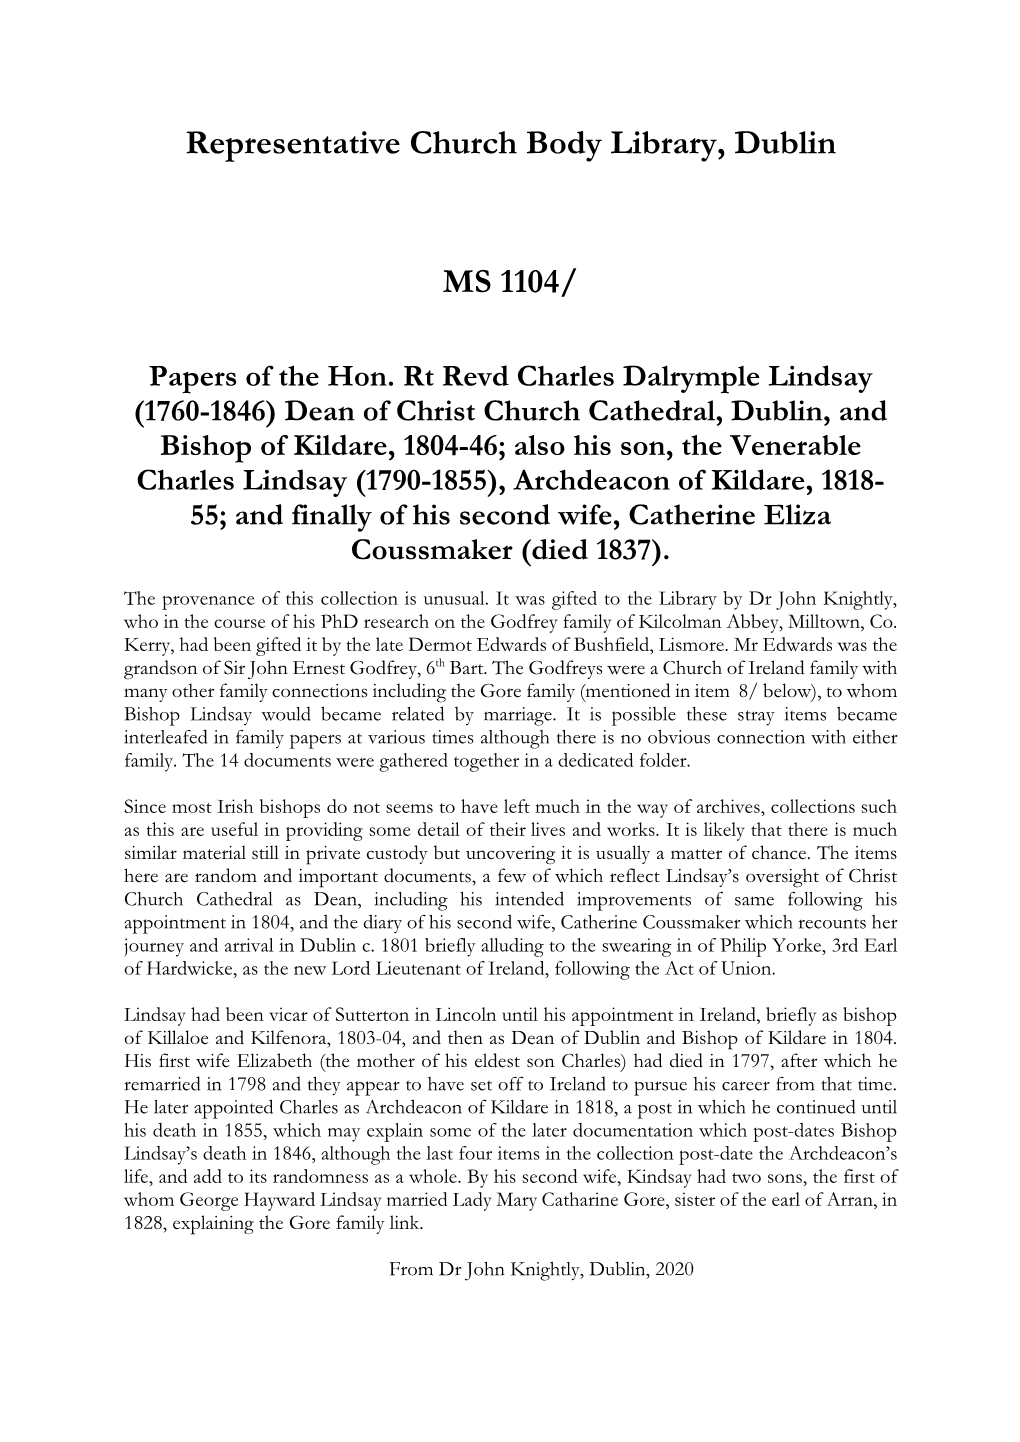 Representative Church Body Library, Dublin MS 1104